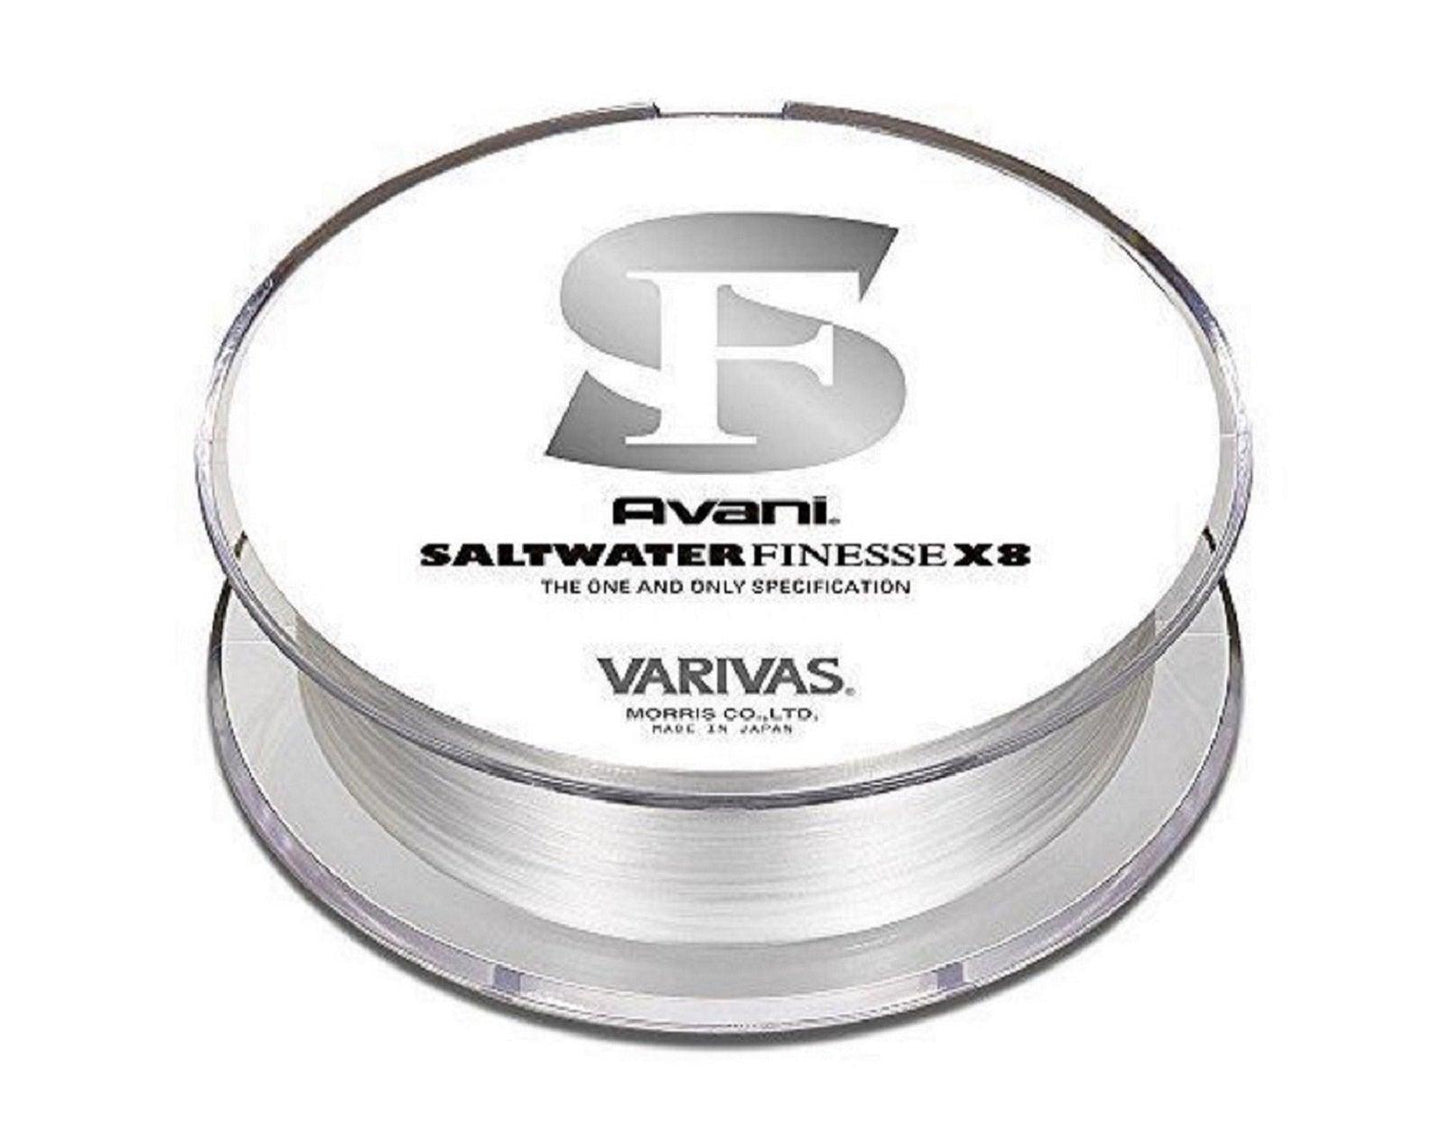 Varivas - Avani Saltwater Finesse X8 - SP-Fishing